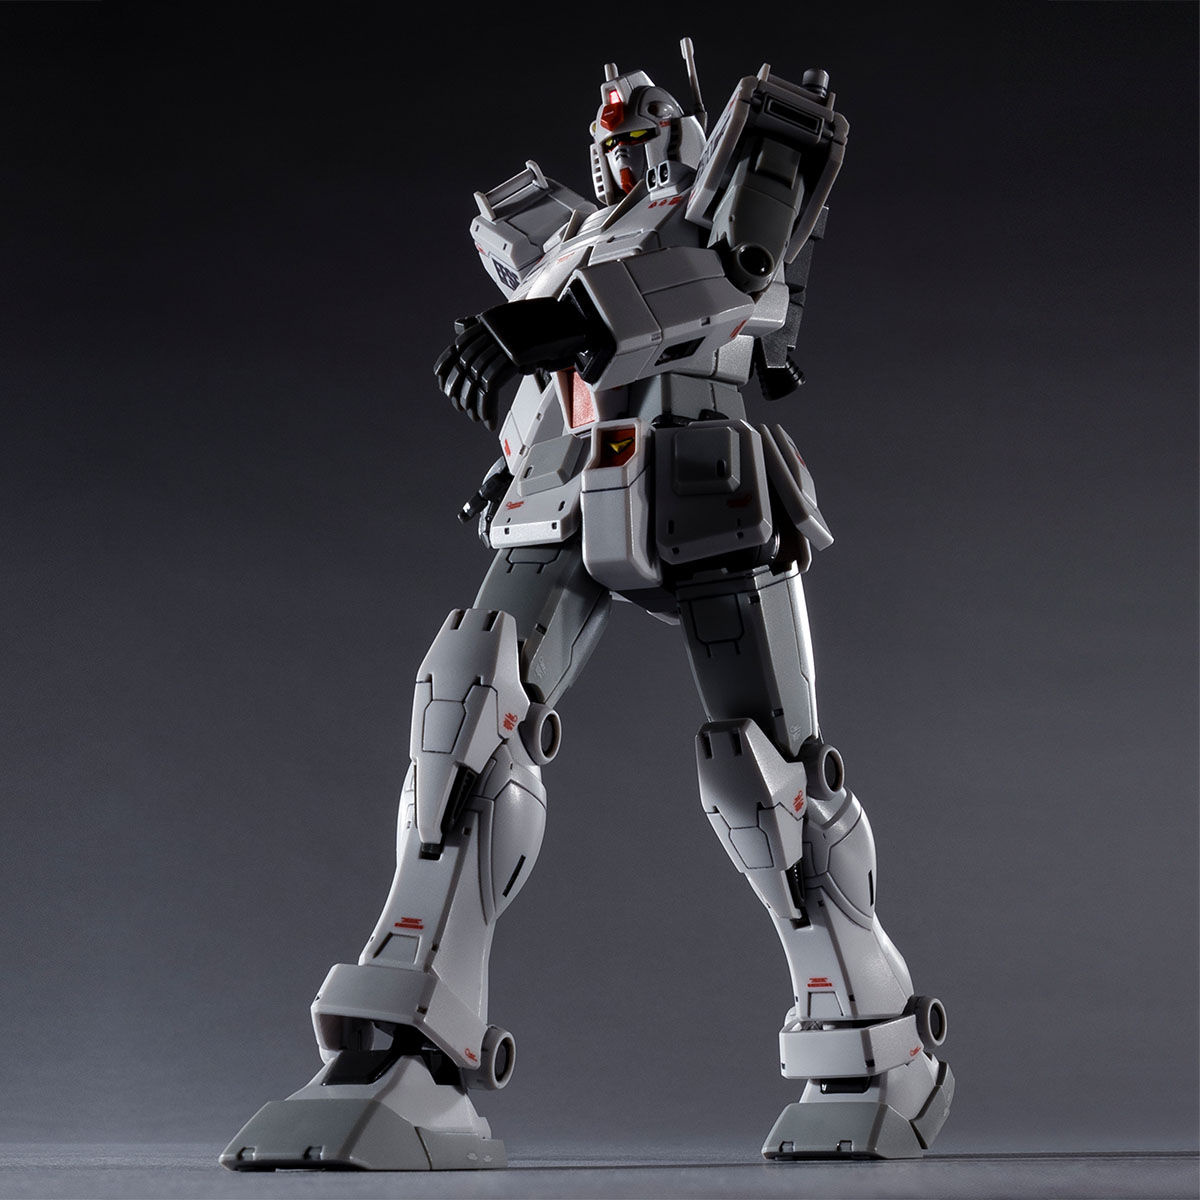 P-BANDAI HG 1/144 RX-78-02 Gundam Rollout Color GUNDAM THE ORIGIN Plastic Model 